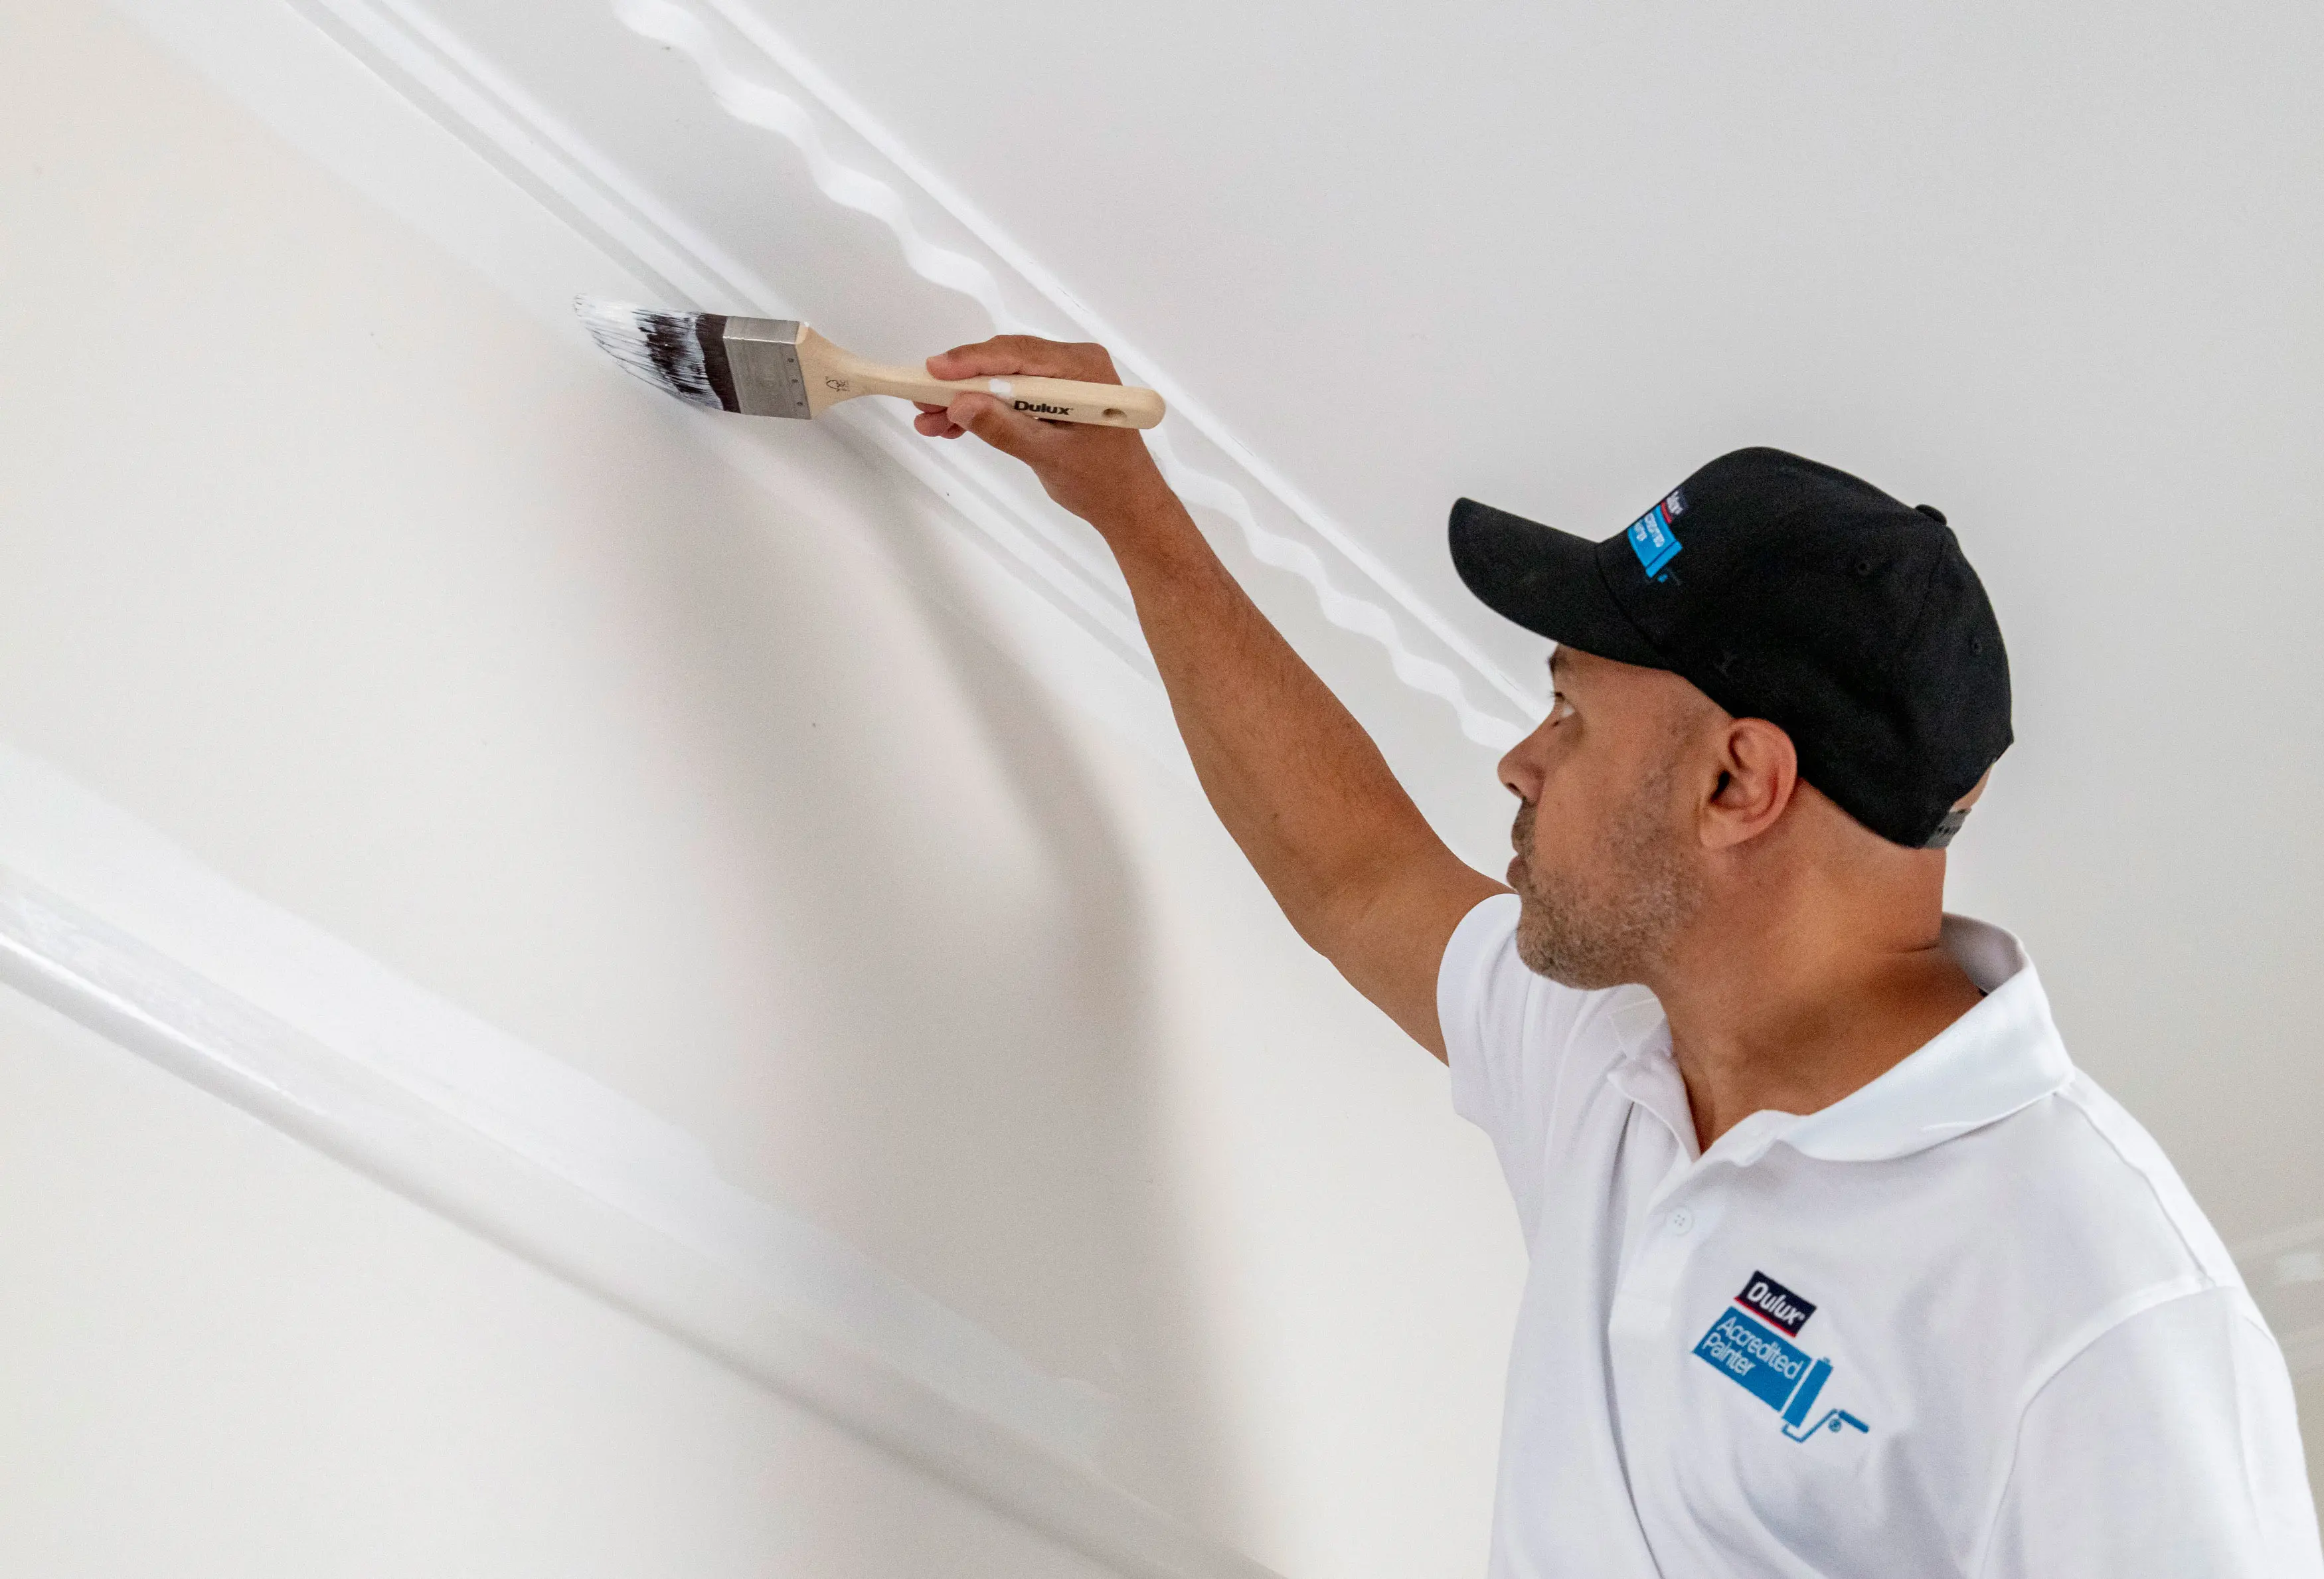 Professional painter painting interior trim white.